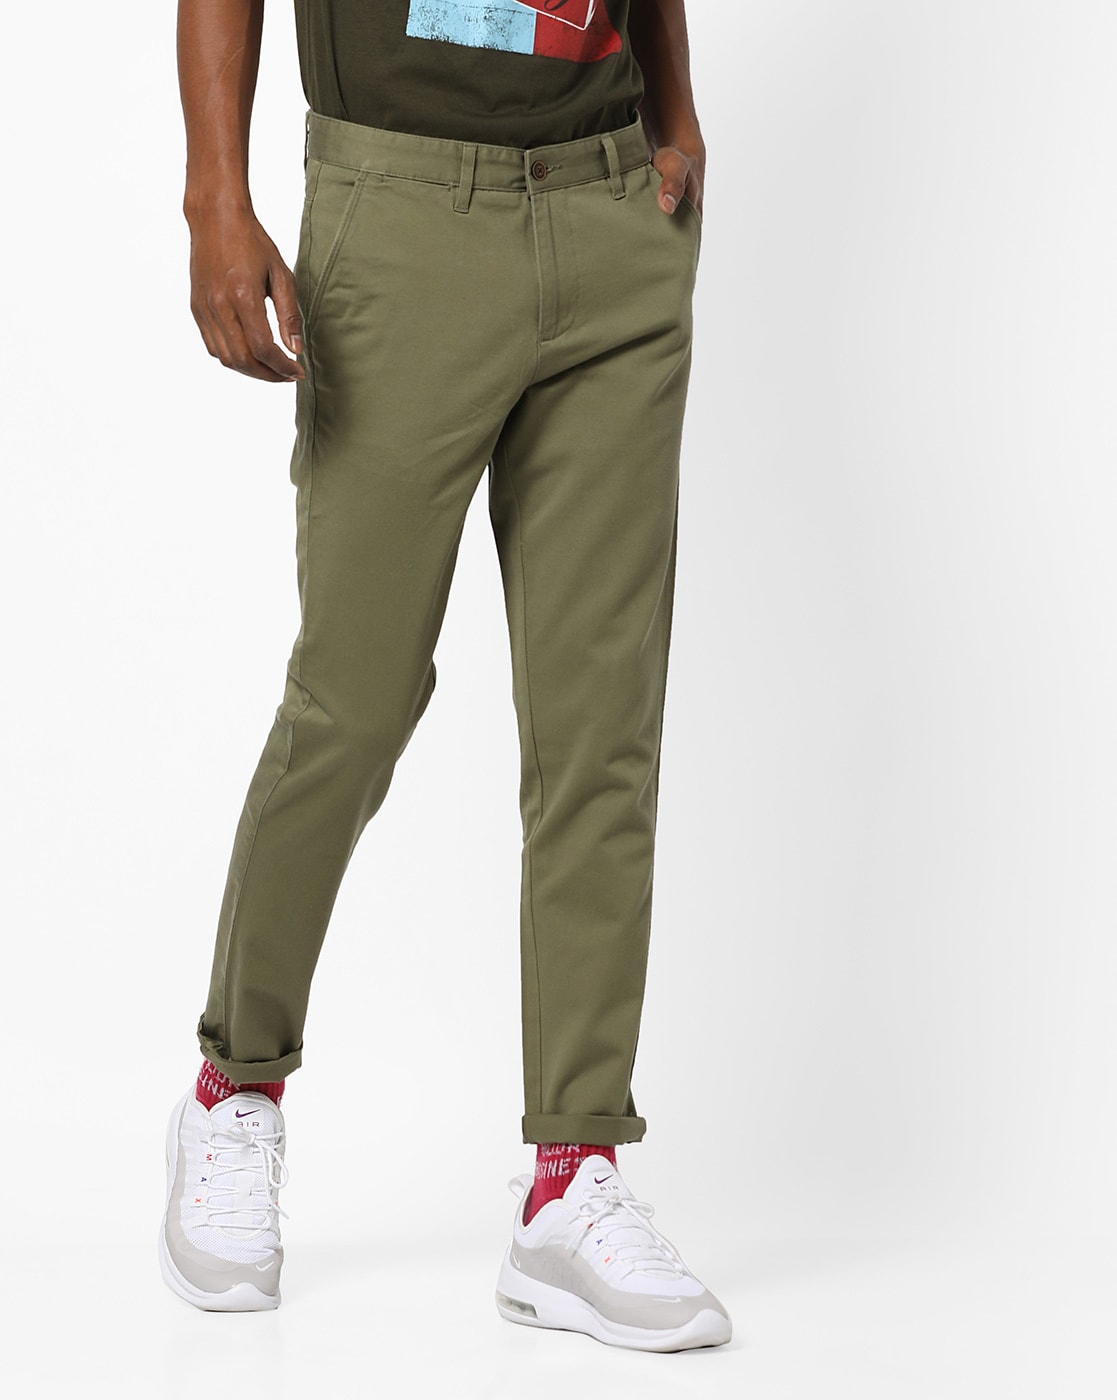 Buy Olive Green Trousers  Pants for Men by AJIO Online  Ajiocom